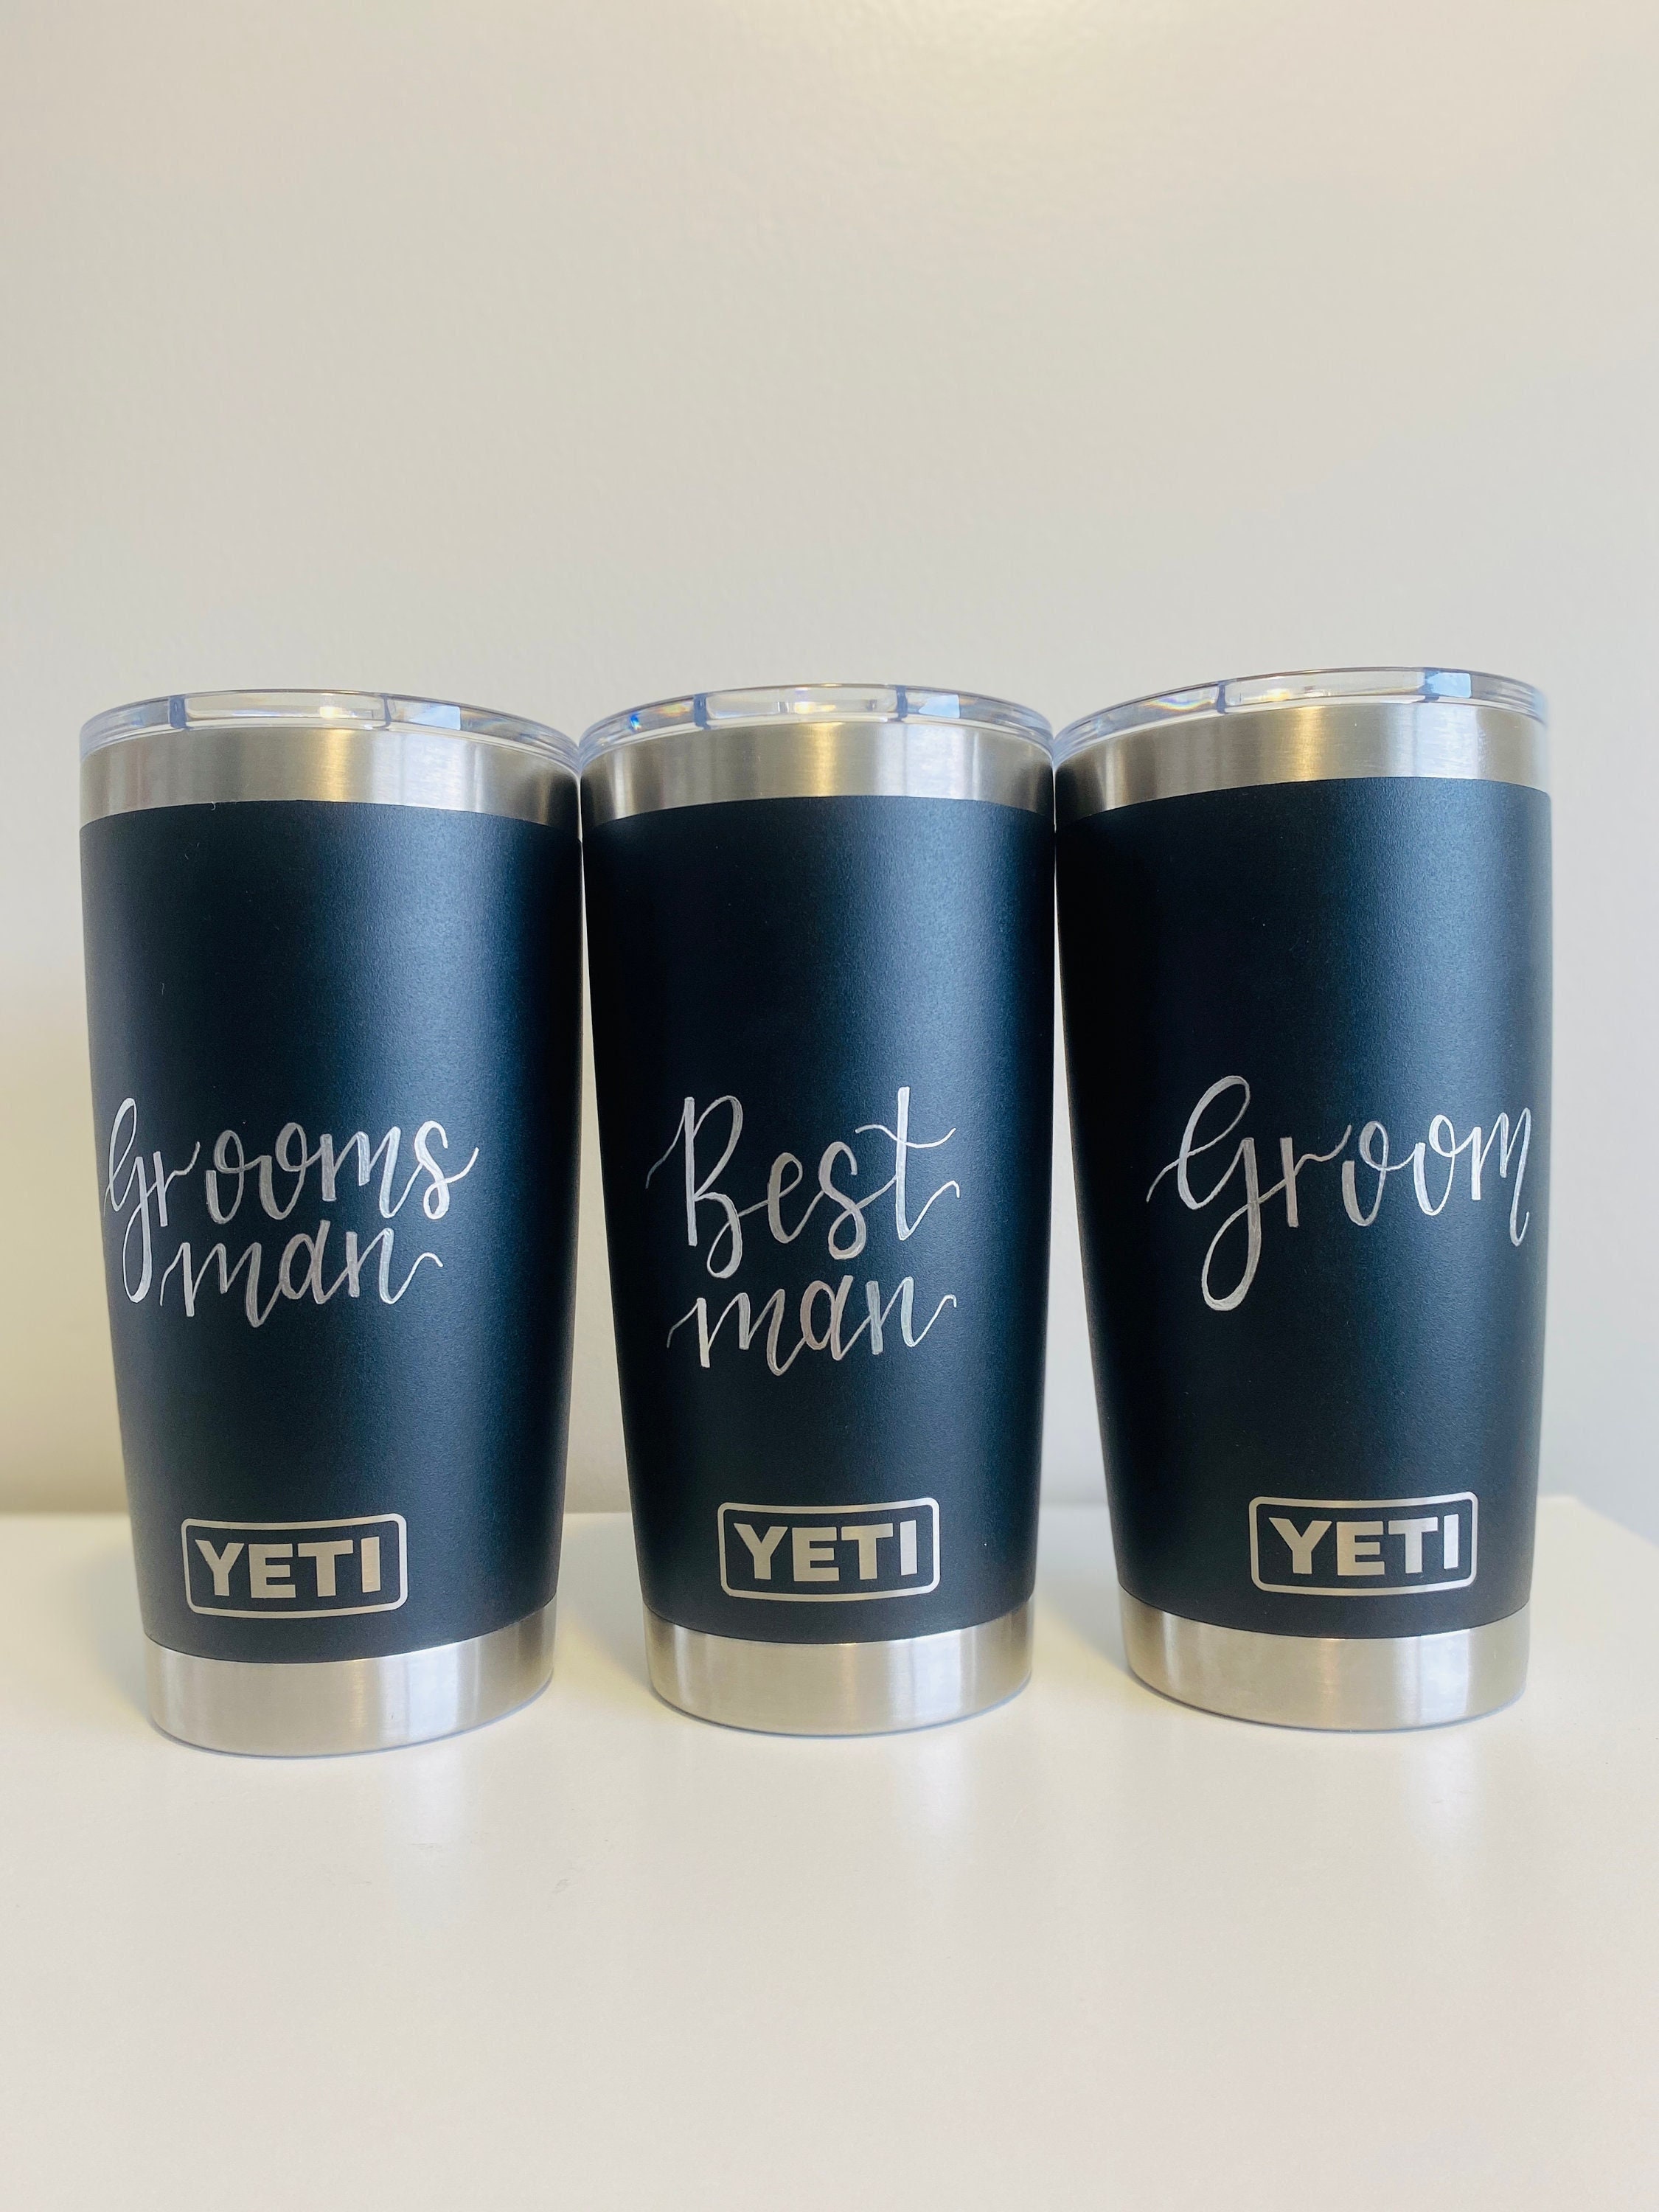 YETI Engraving and Digital Printing Personalization - Georgia